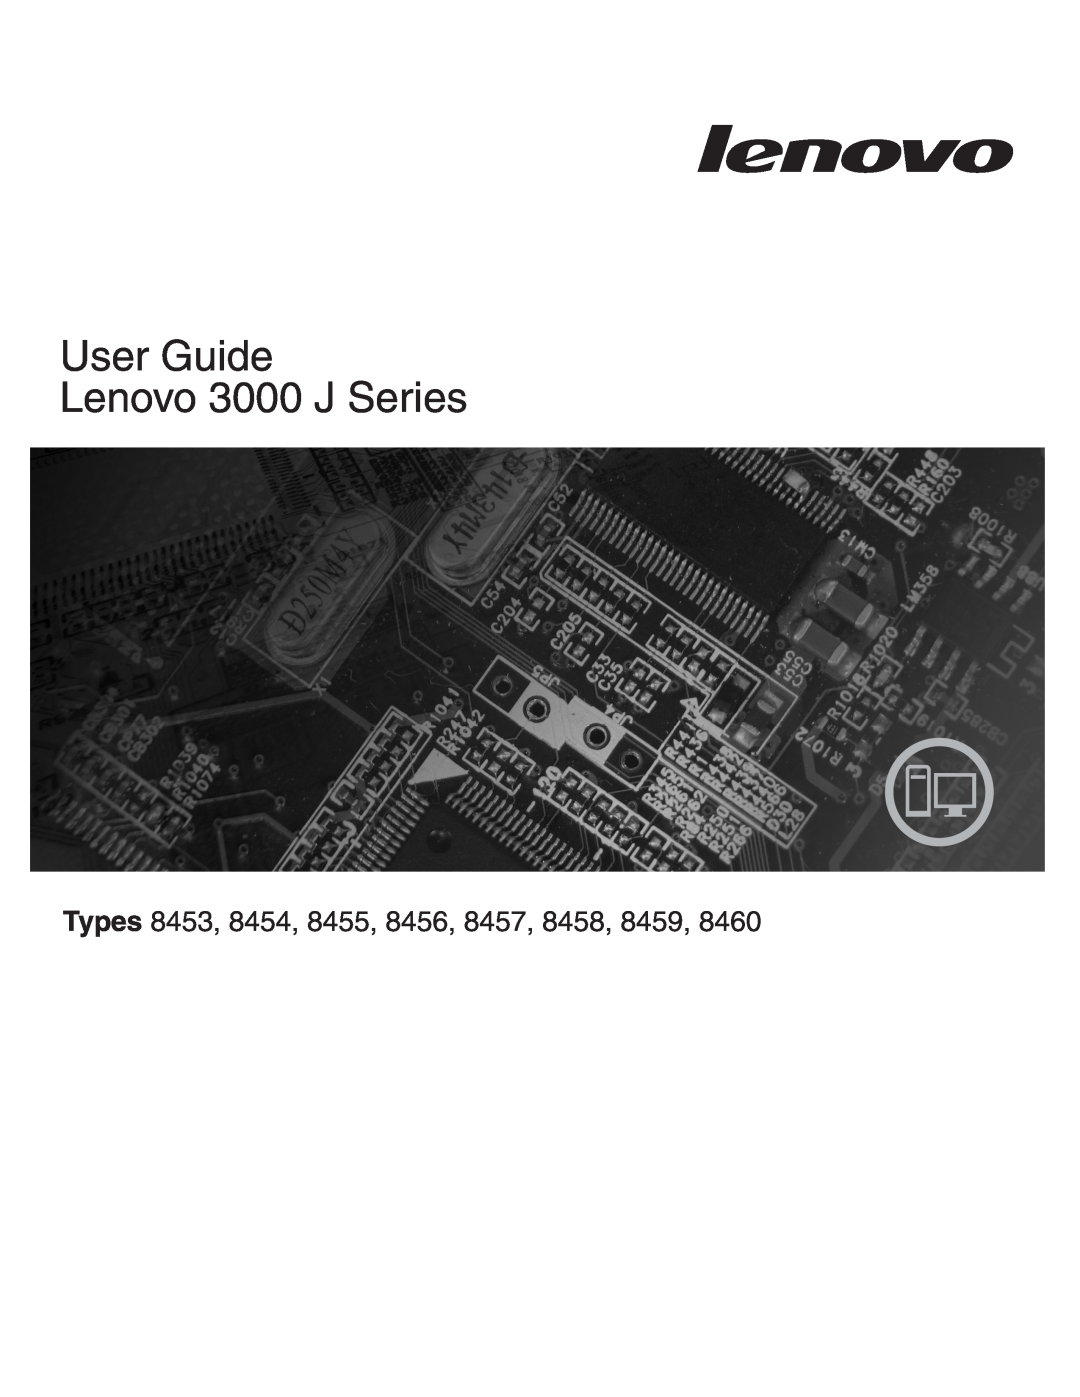 Lenovo 8460 manual User Guide Lenovo 3000 J Series, Types 8453, 8454, 8455, 8456, 8457, 8458, 8459 